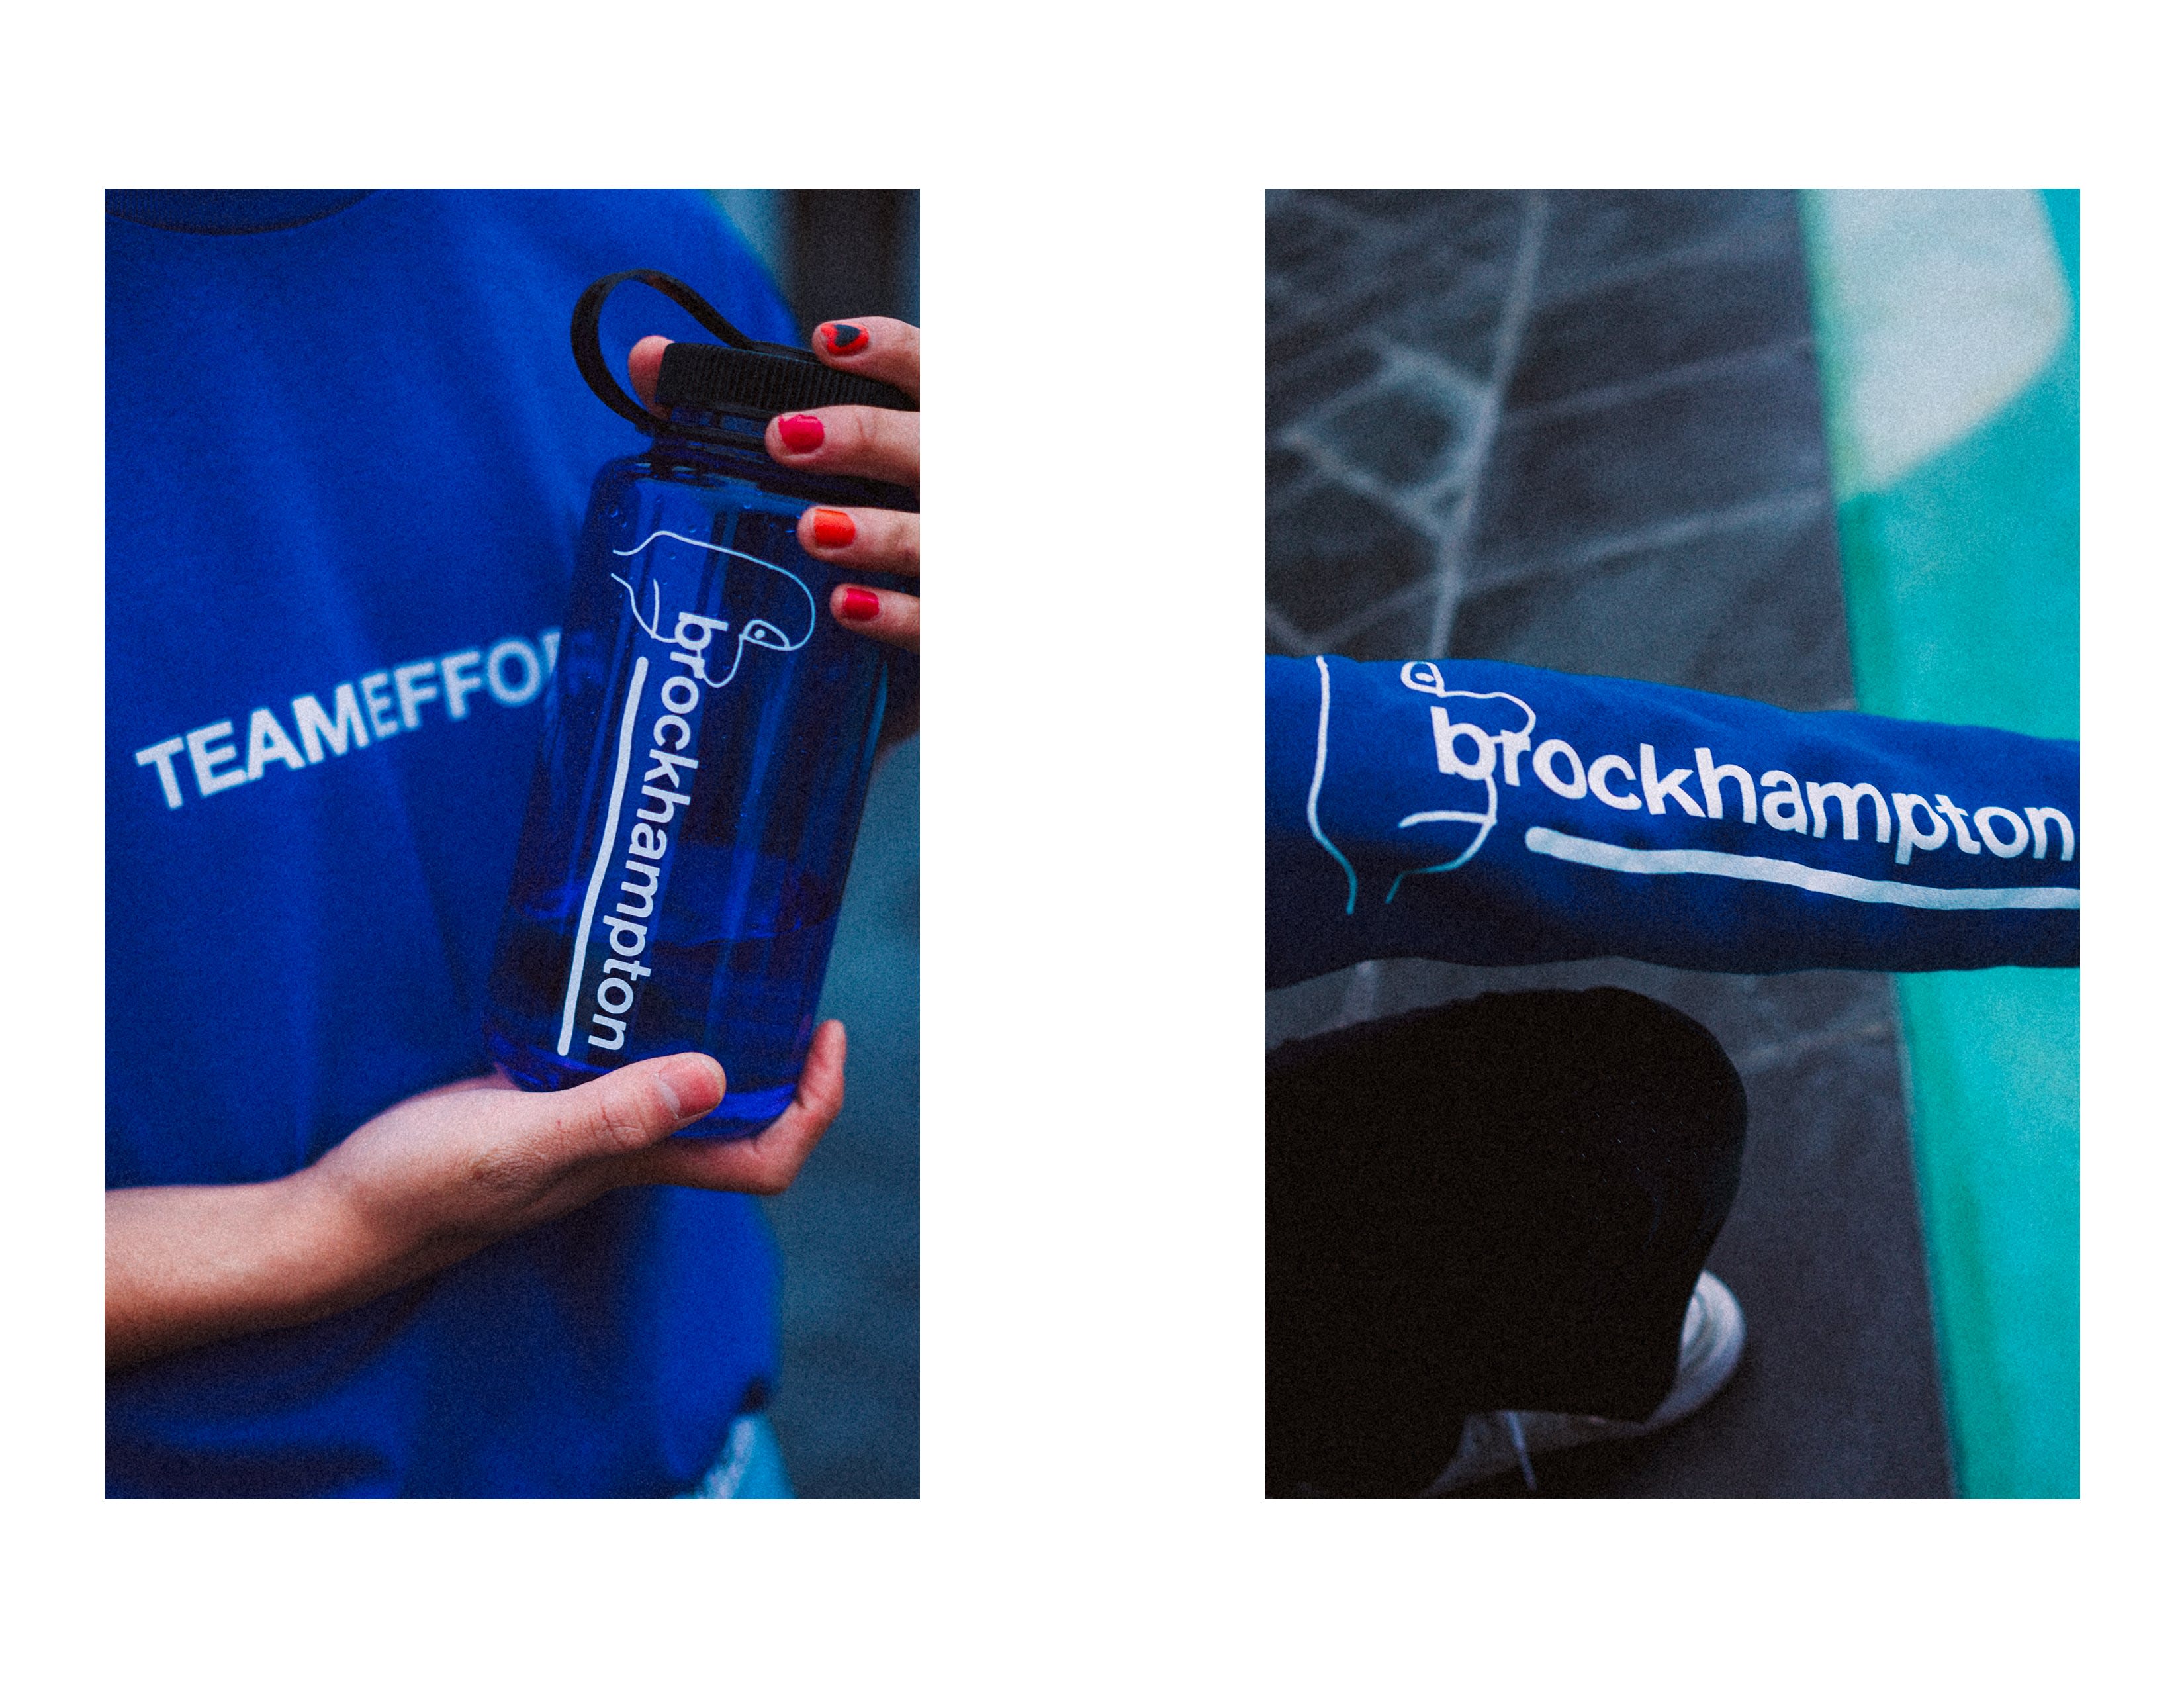 Brockhampton S/S Lookbook